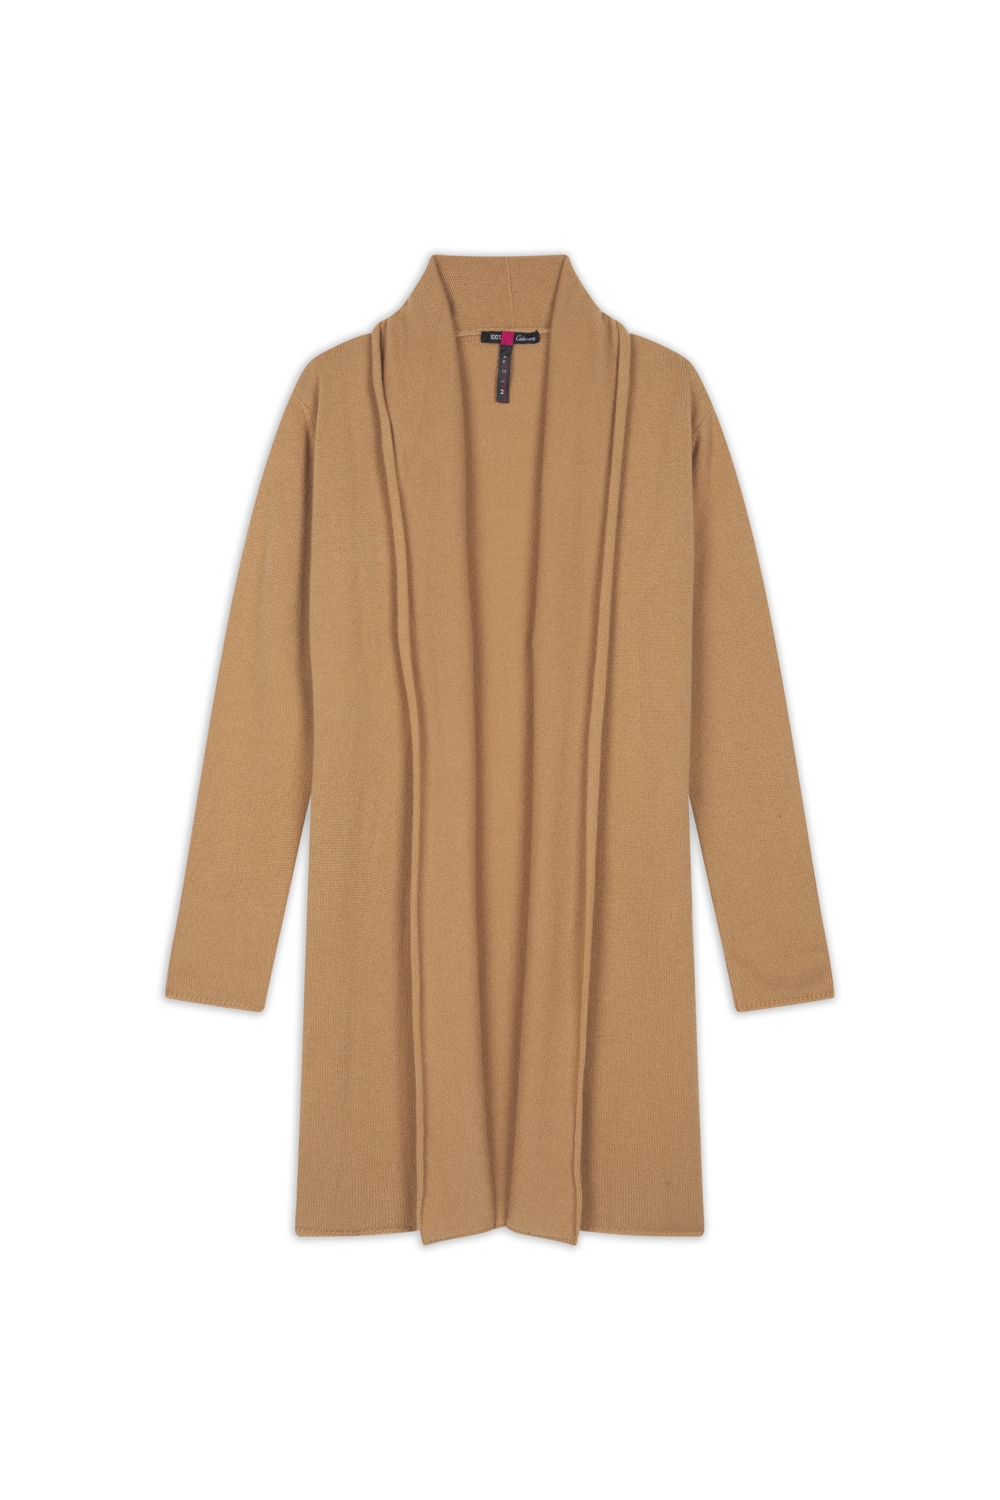 Cachemire robe manteau femme perla camel 2xl